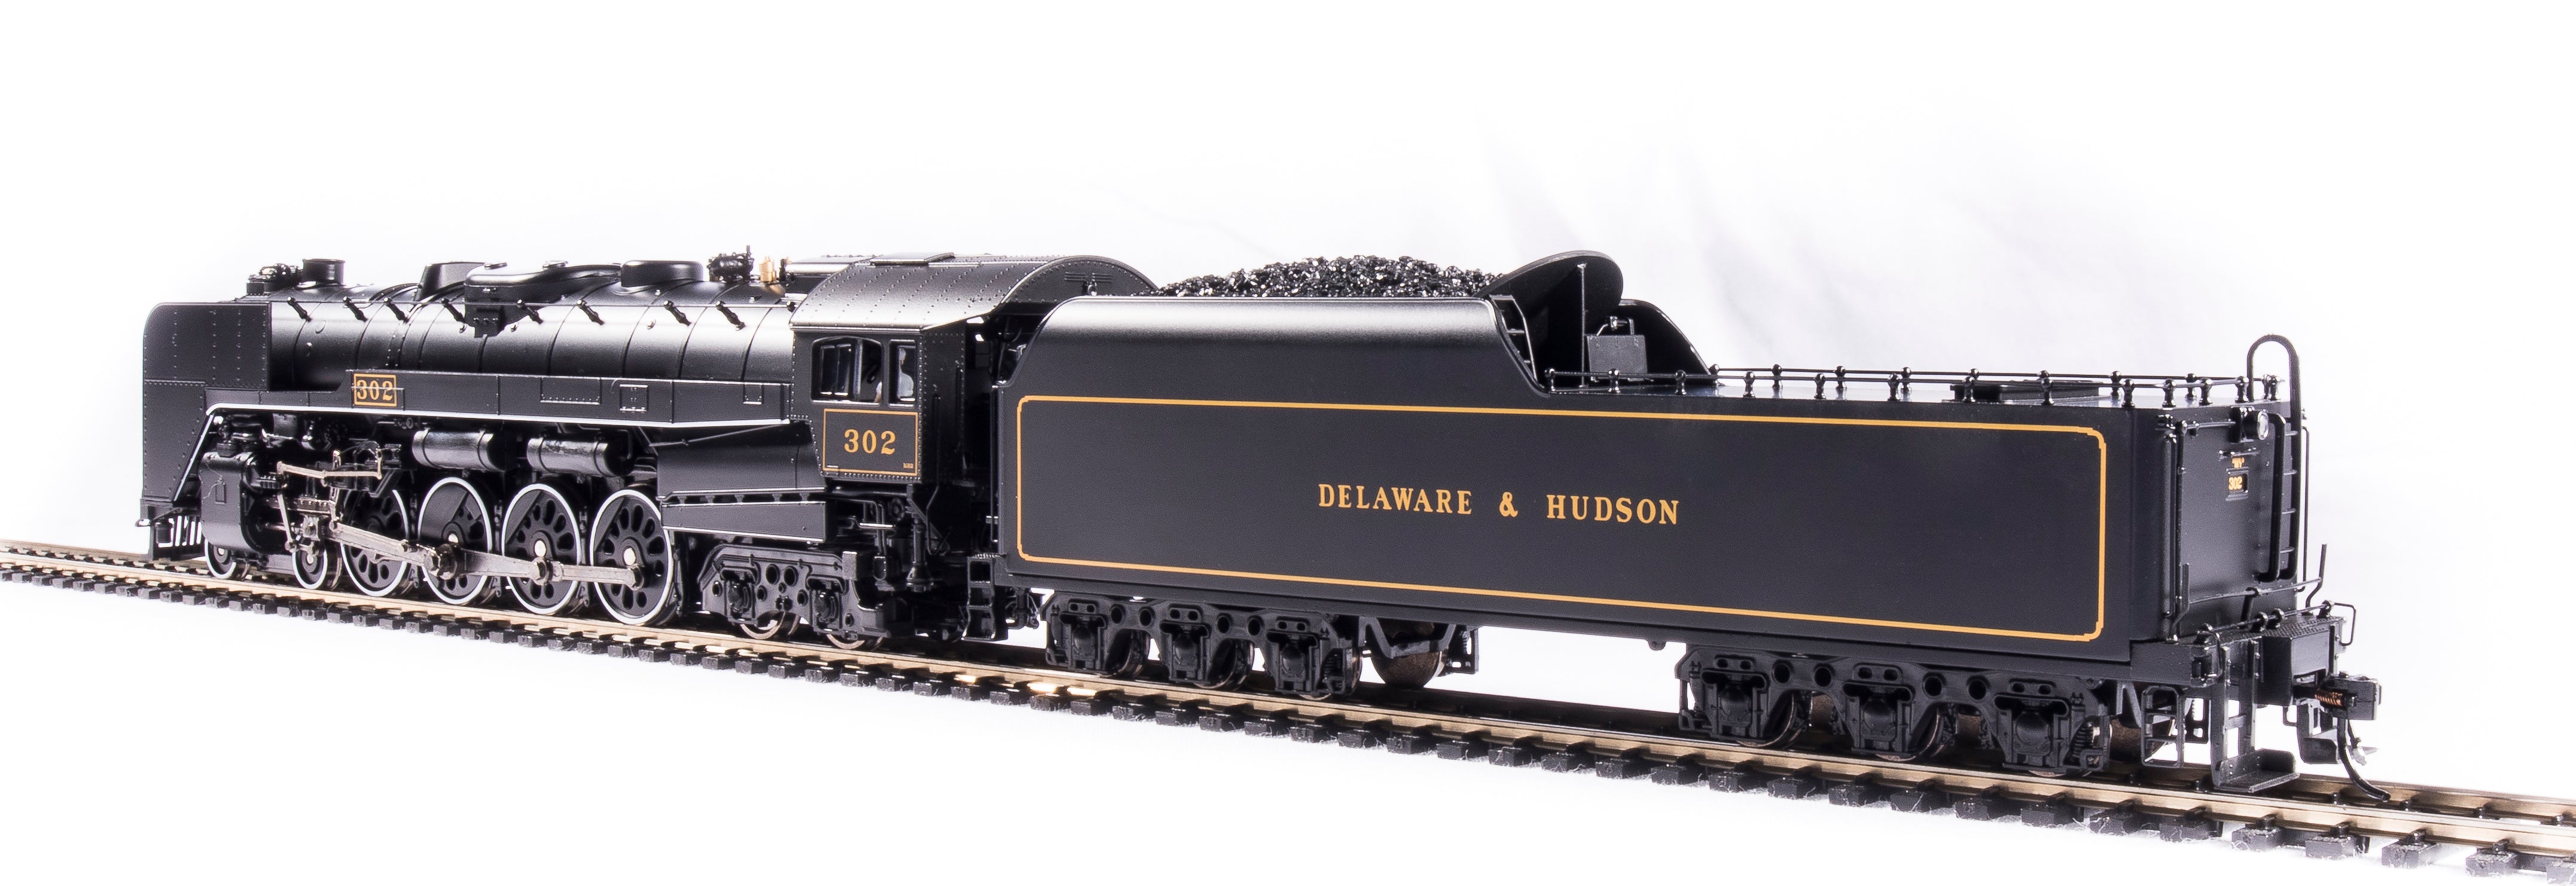 6810 Delaware & Hudson 4-8-4, Centennial Locomotive #302, Paragon4 Sound/DC/DCC, Smoke, HO (w deflectors)